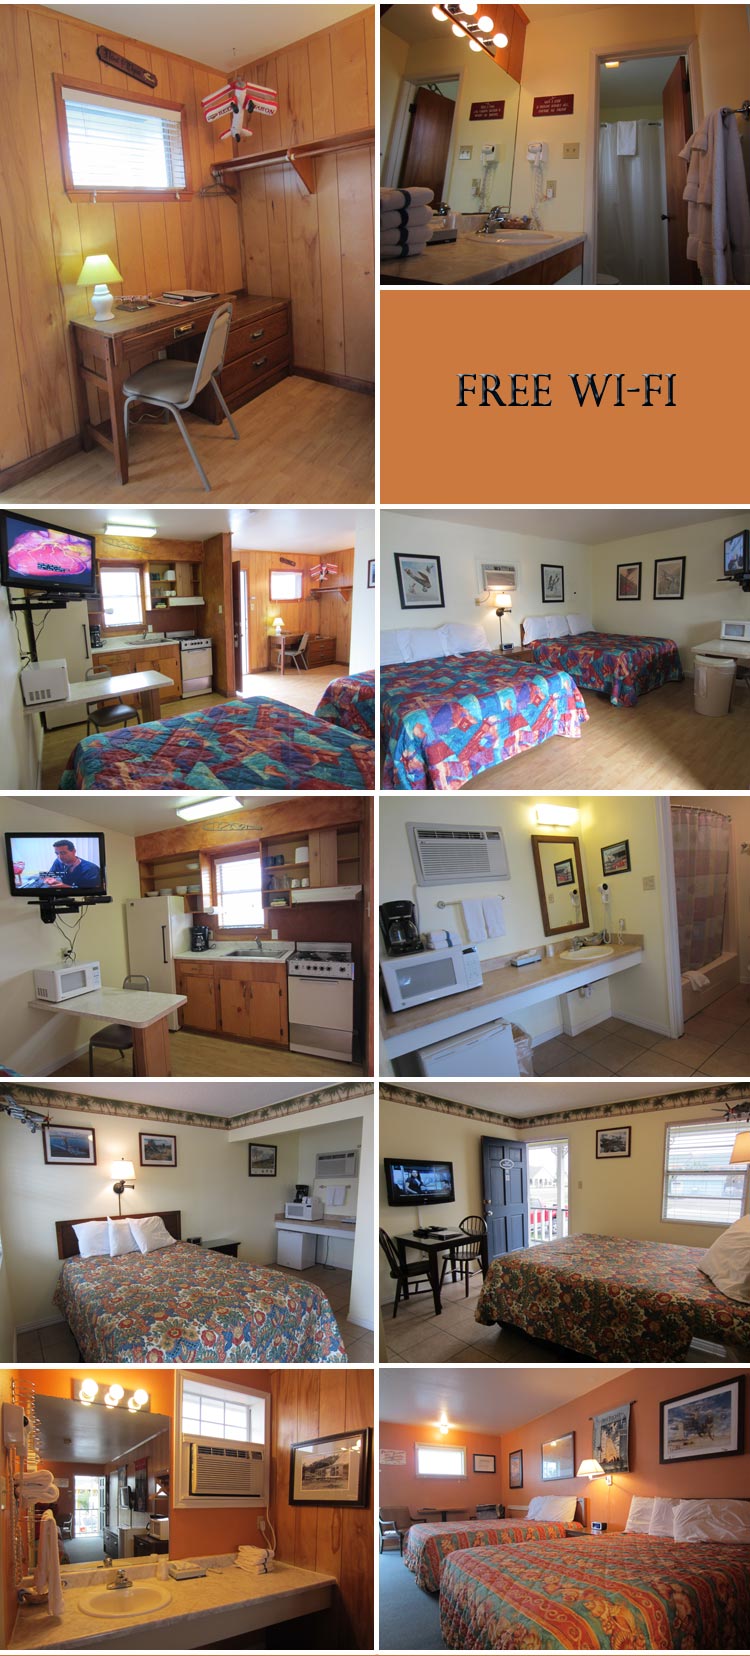 Amelia's Landing Hotel - Vacation Rentals in Port Aransas, Texas.